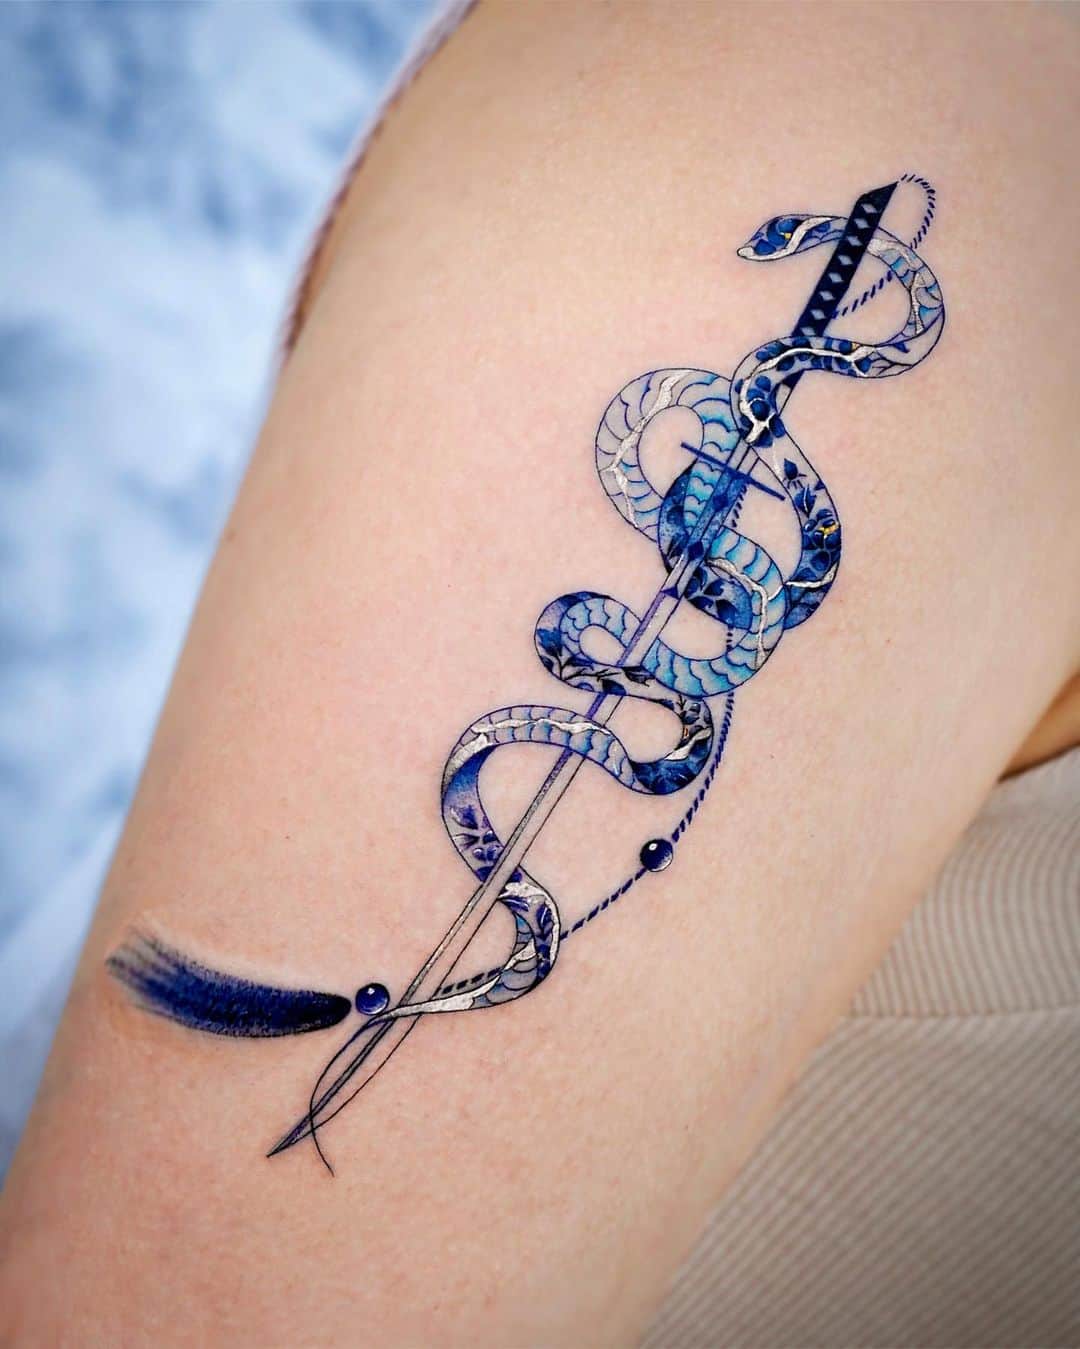 Internet  dna full tattoo sleeve  Tattoo contest  99designs